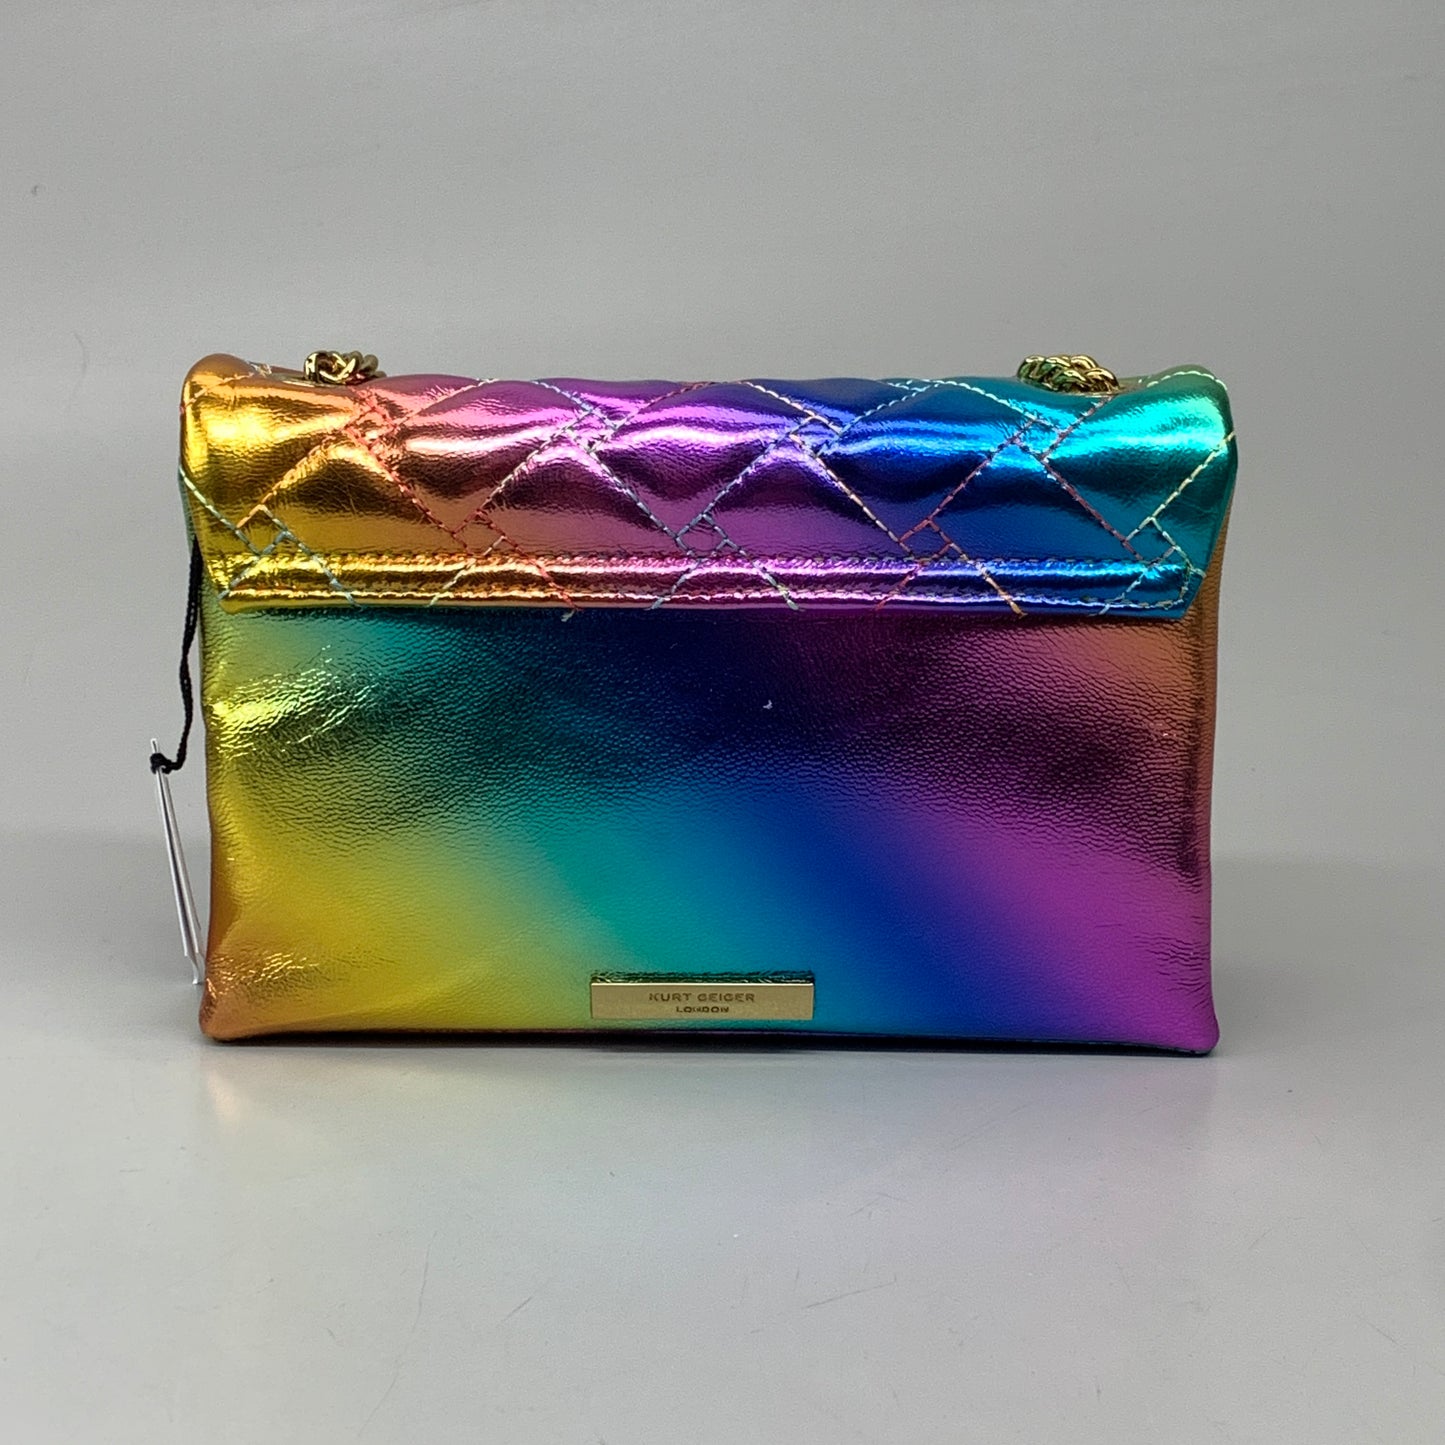 KURT GEIGER Kensington Leather Rainbow Day Bag 8" x 6" Rainbow 9796969109 New